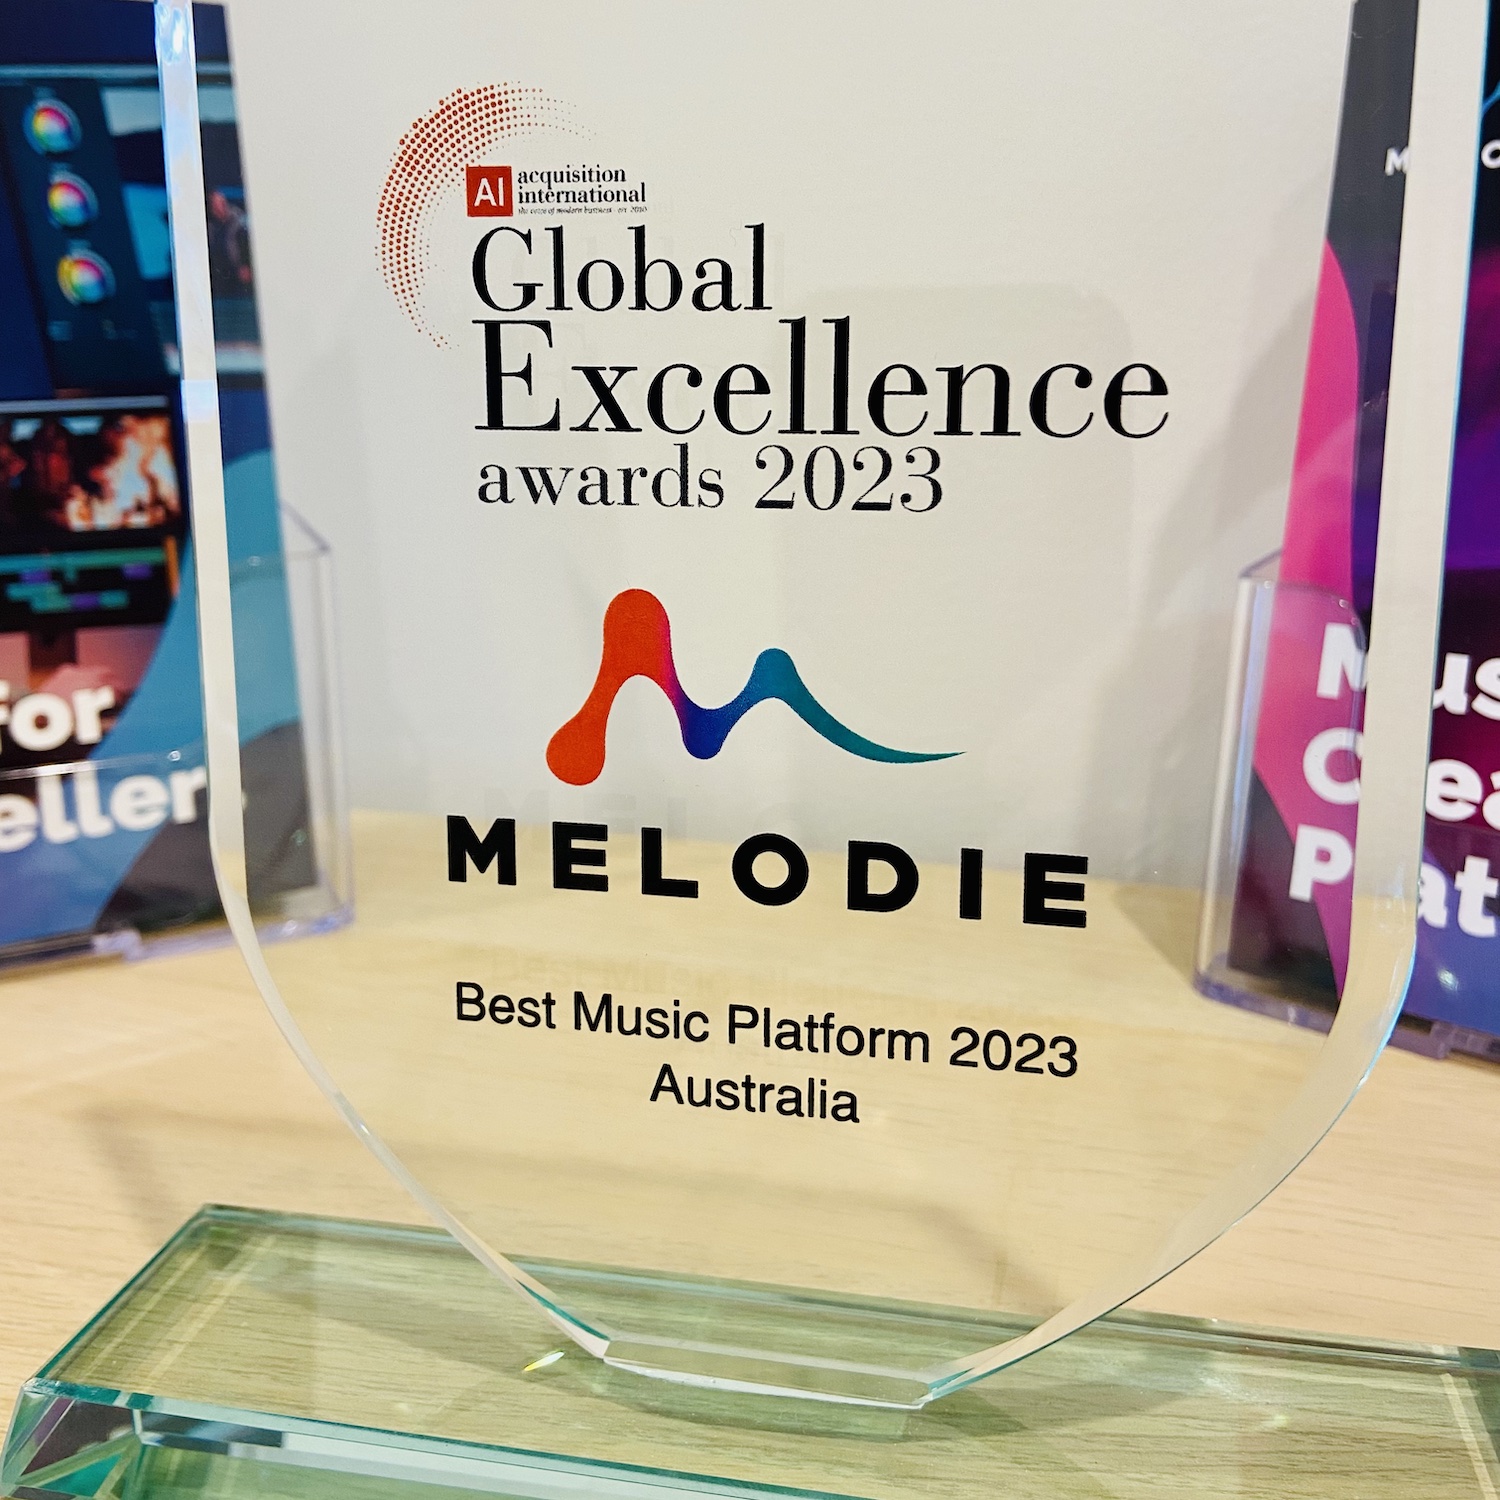 Melodie: Awarded Acquisition International Magazine's "Best Music Platform 2023 Australia"